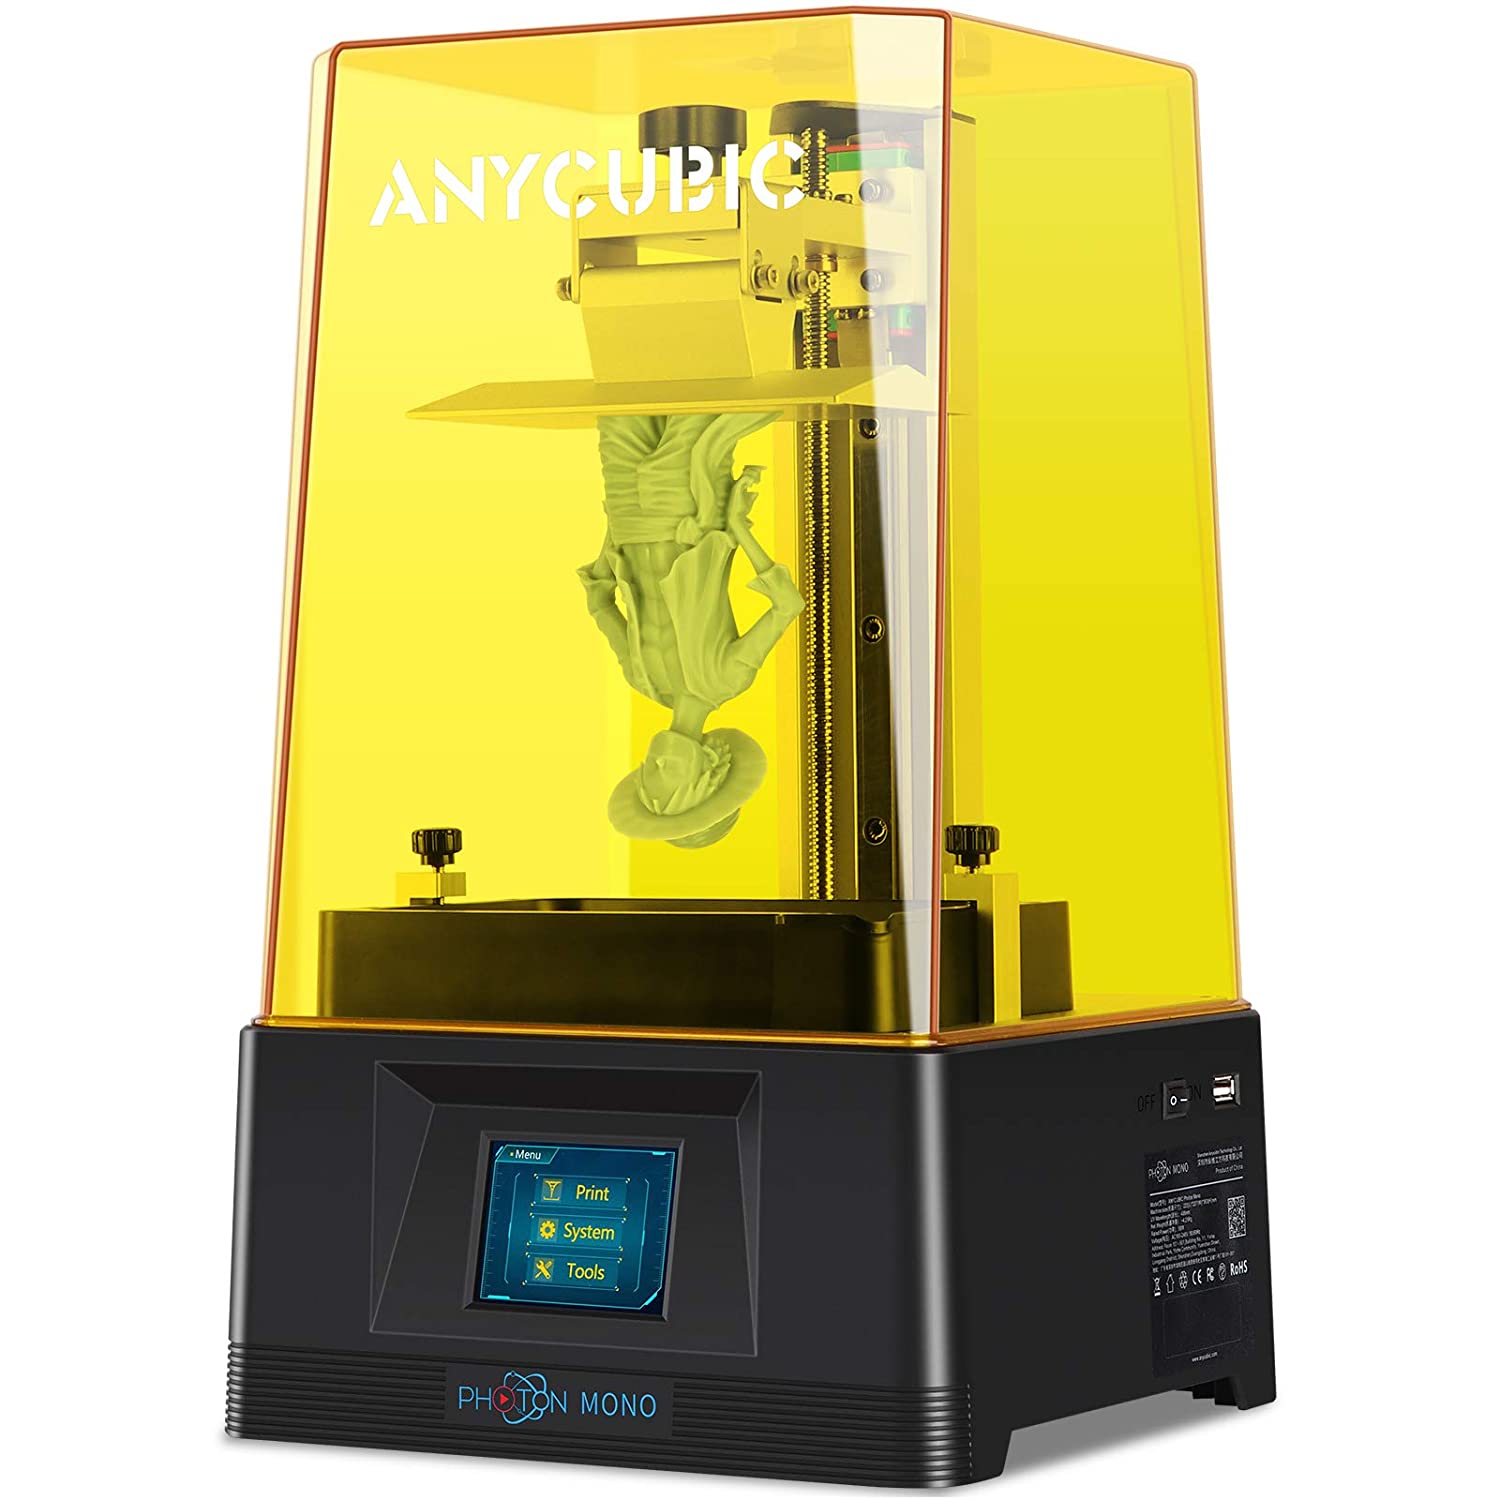 Anycubic Photon Mono 3D Printer